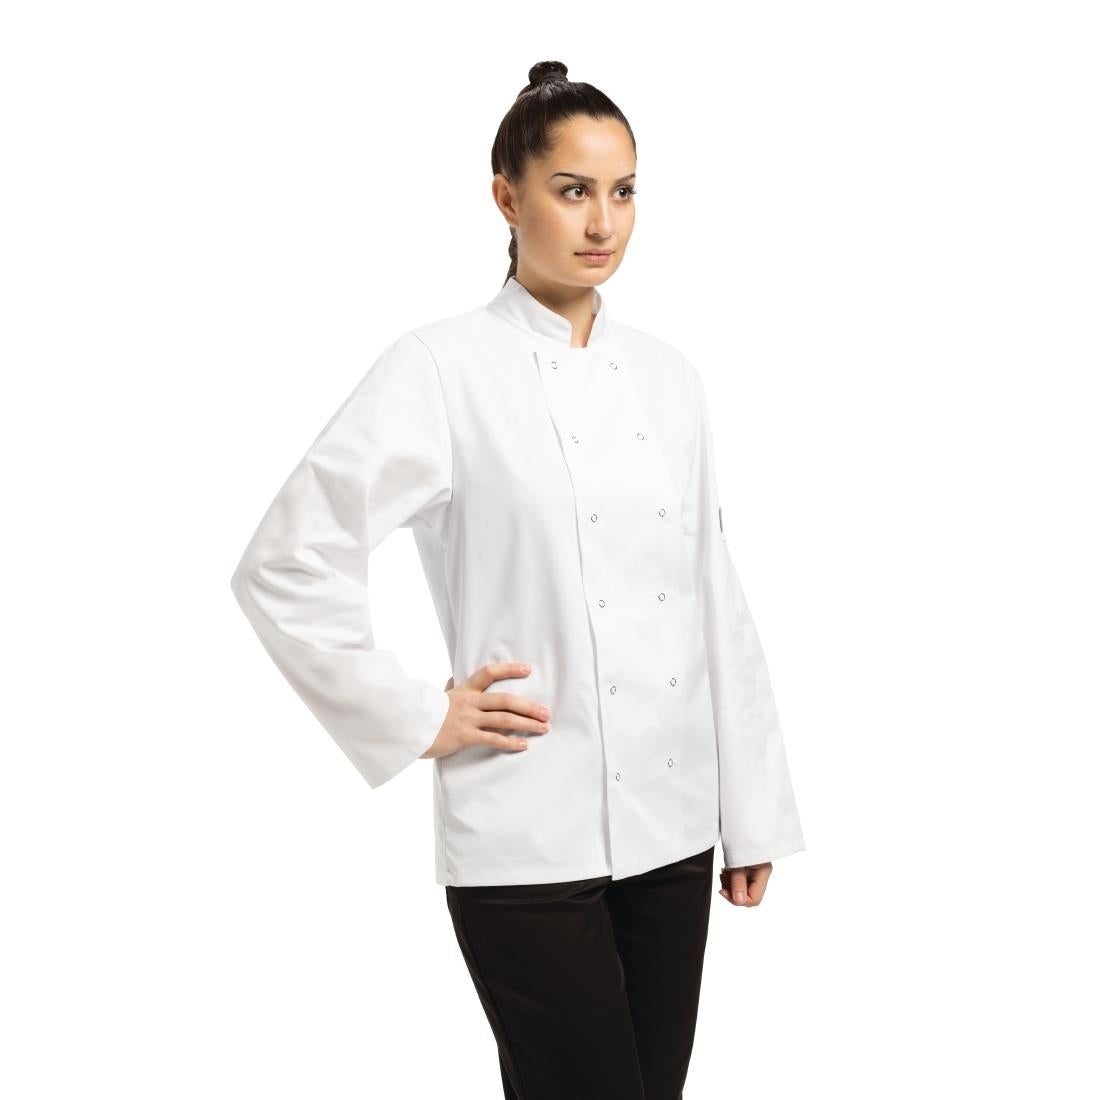 A134-M Whites Vegas Unisex Chefs Jacket Long Sleeve White M JD Catering Equipment Solutions Ltd